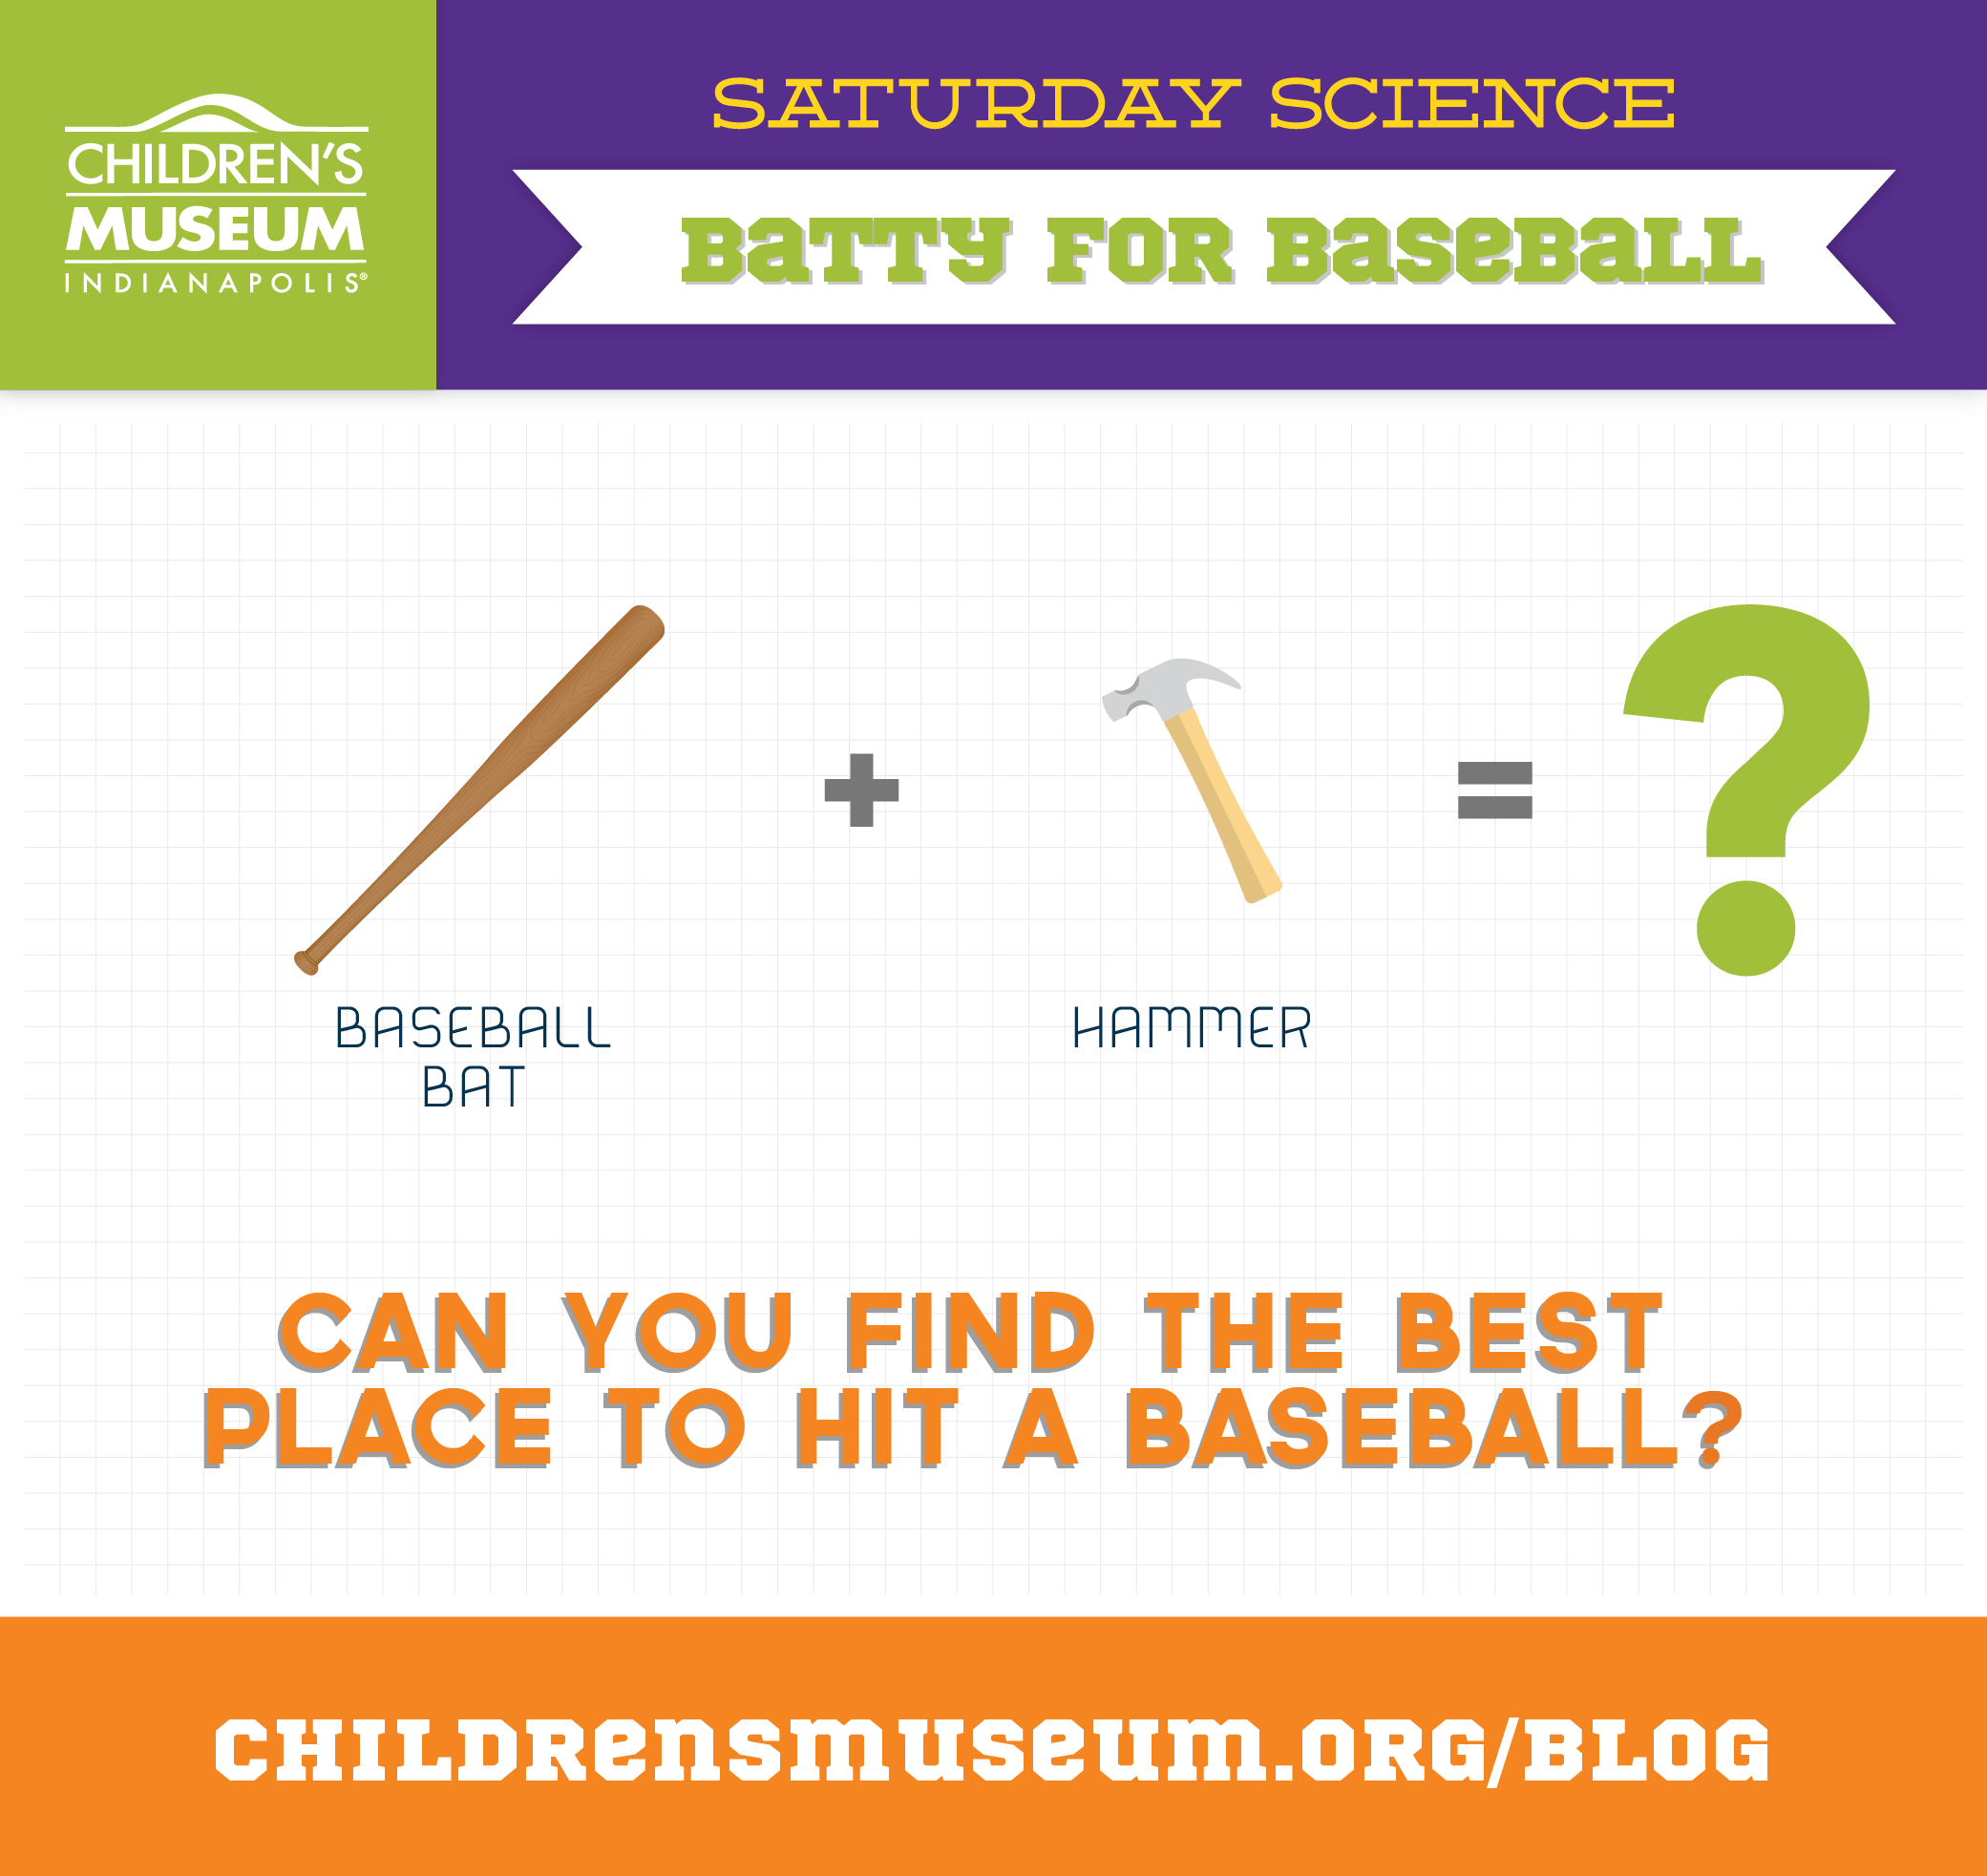 Saturday Science: Batty for Baseball